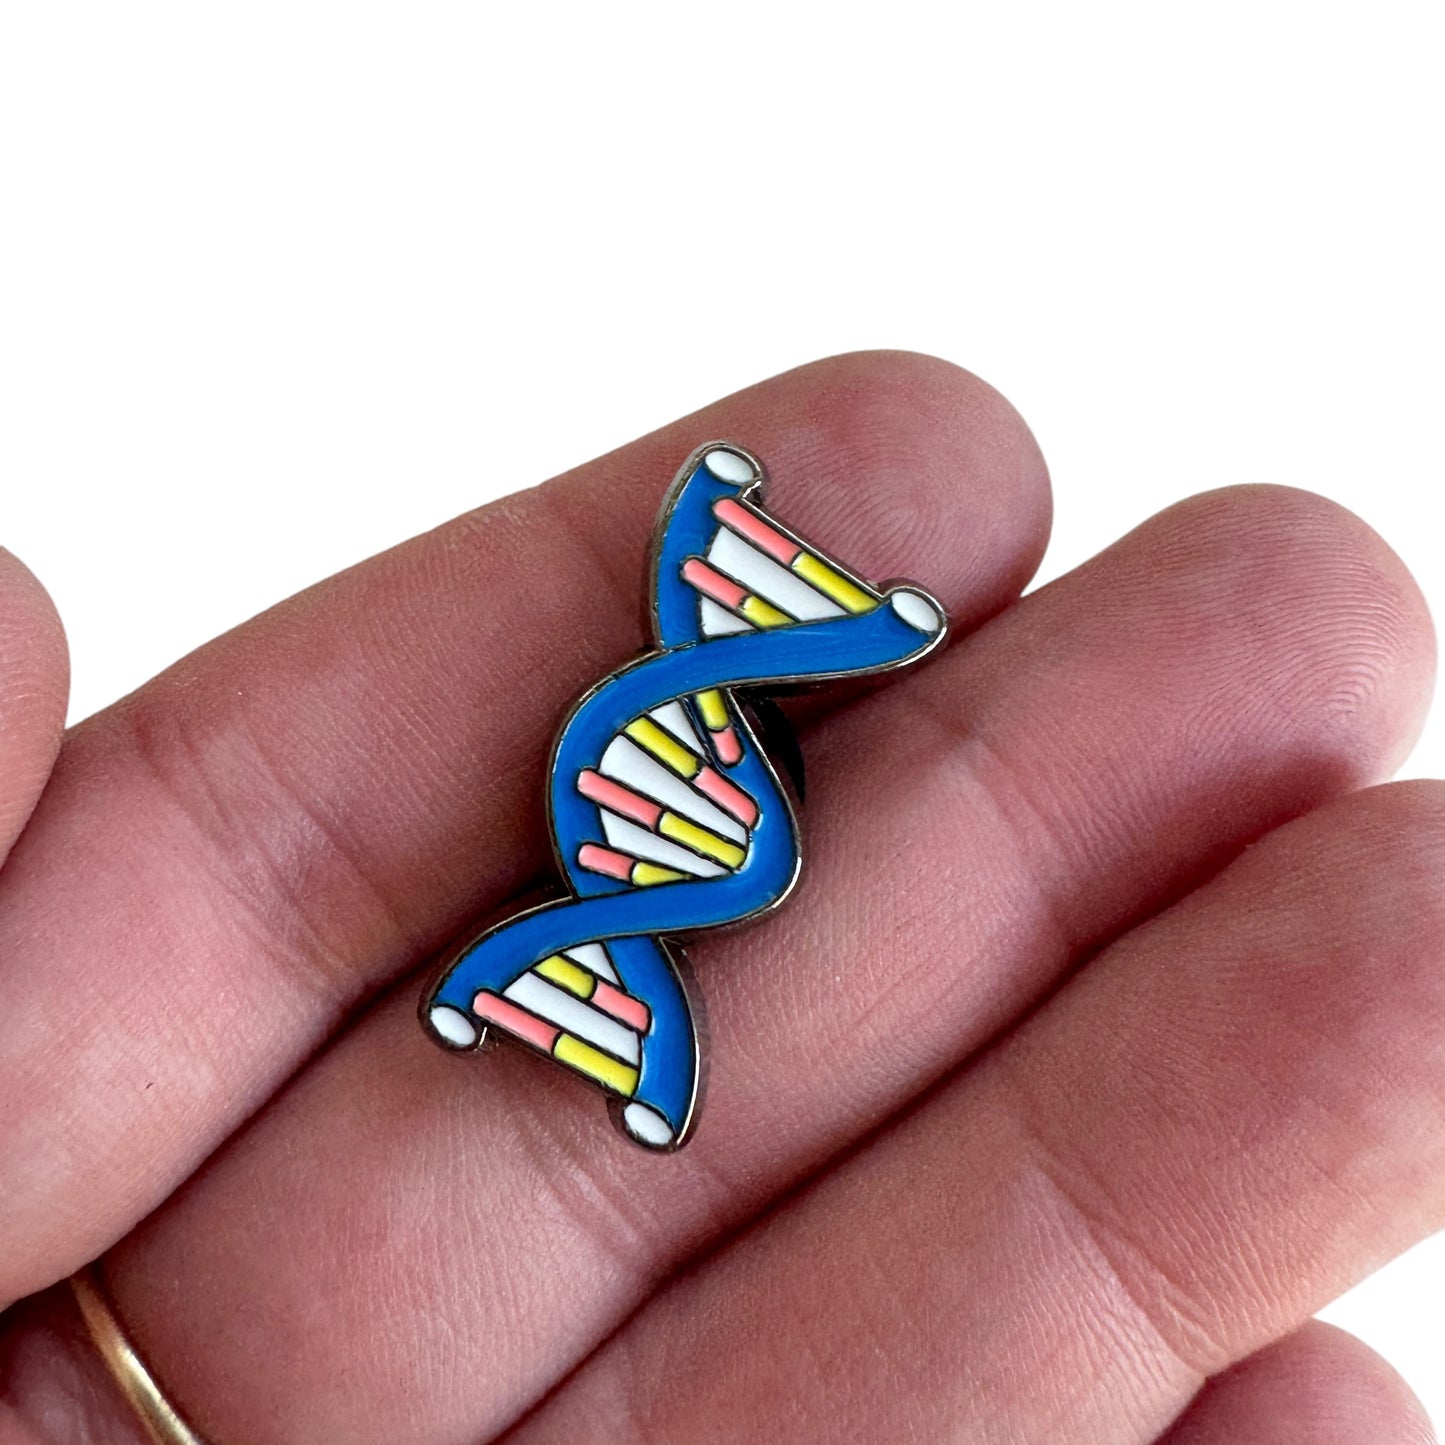 Pin — "DNA Molecule"